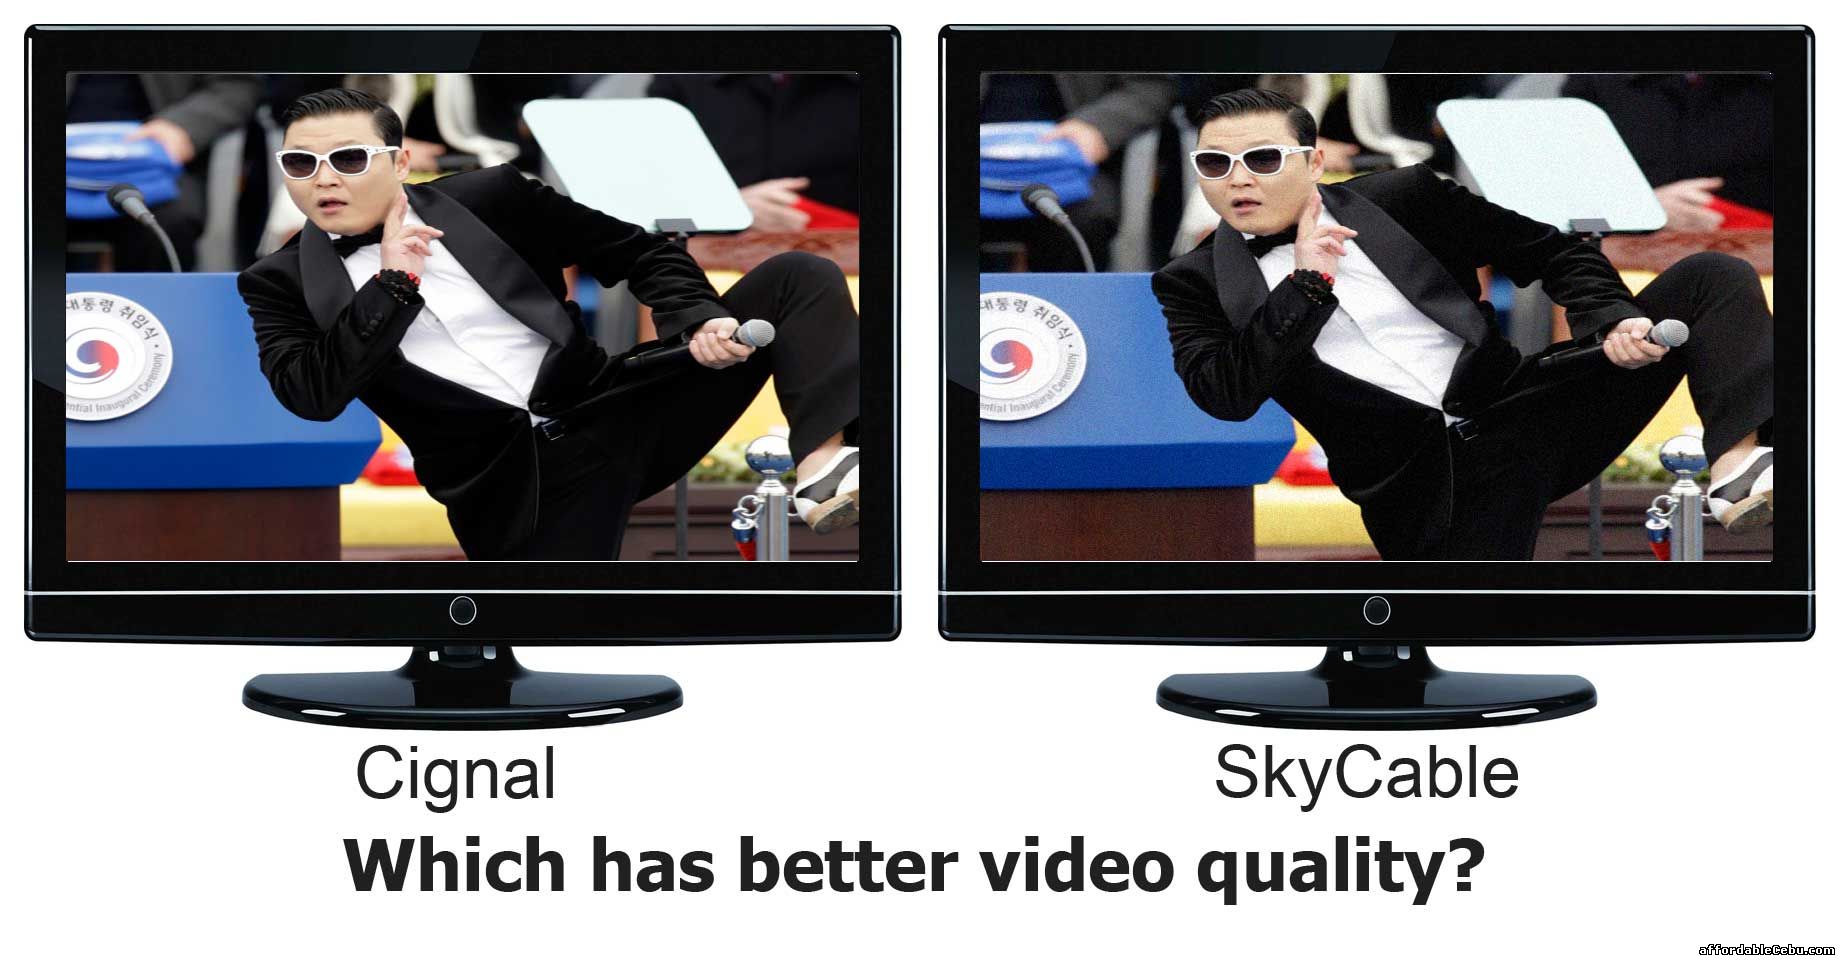 Cignal vs. SkyCable